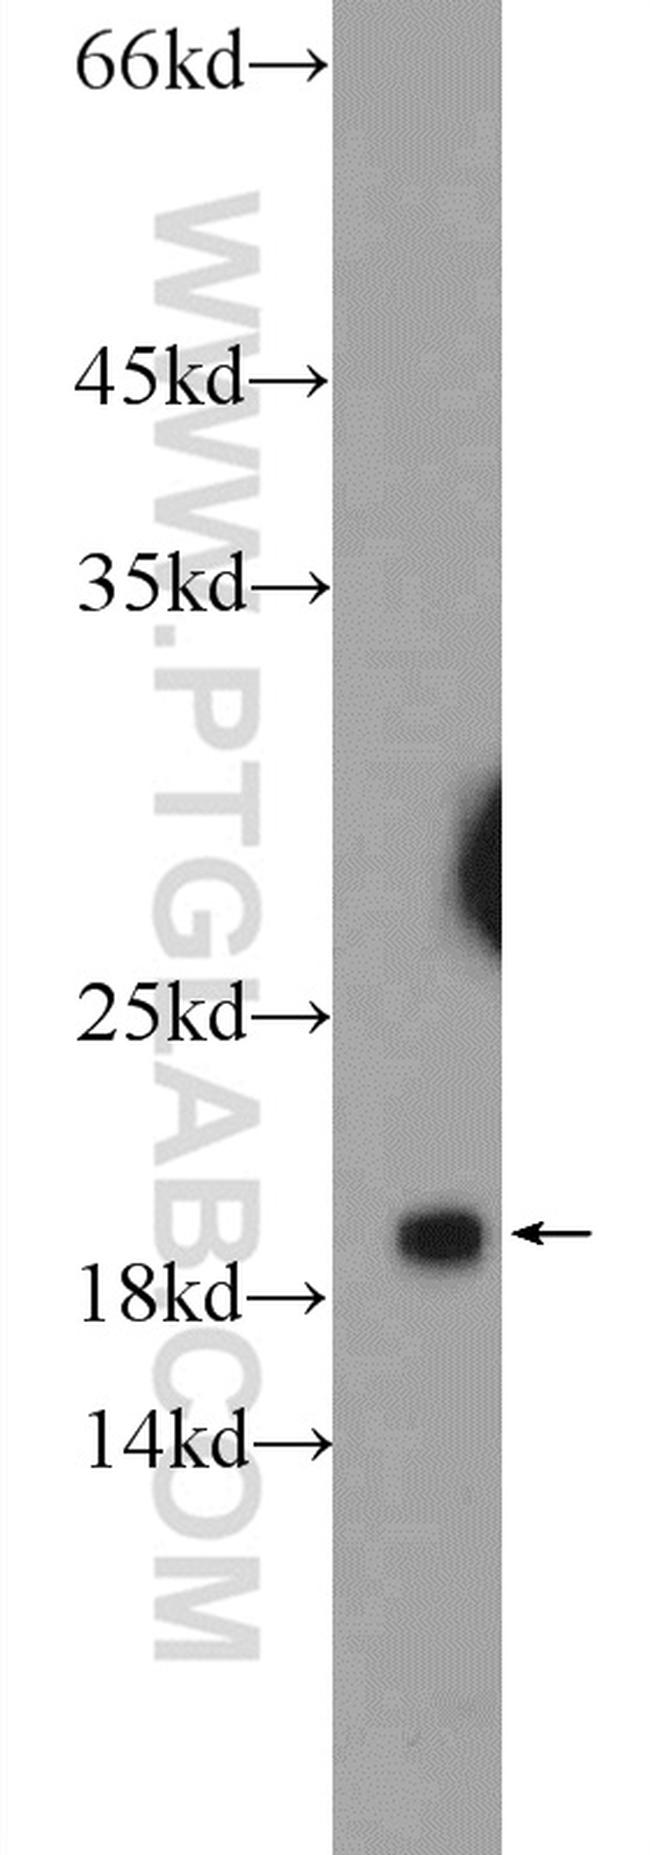 ARPP-19 Antibody in Western Blot (WB)